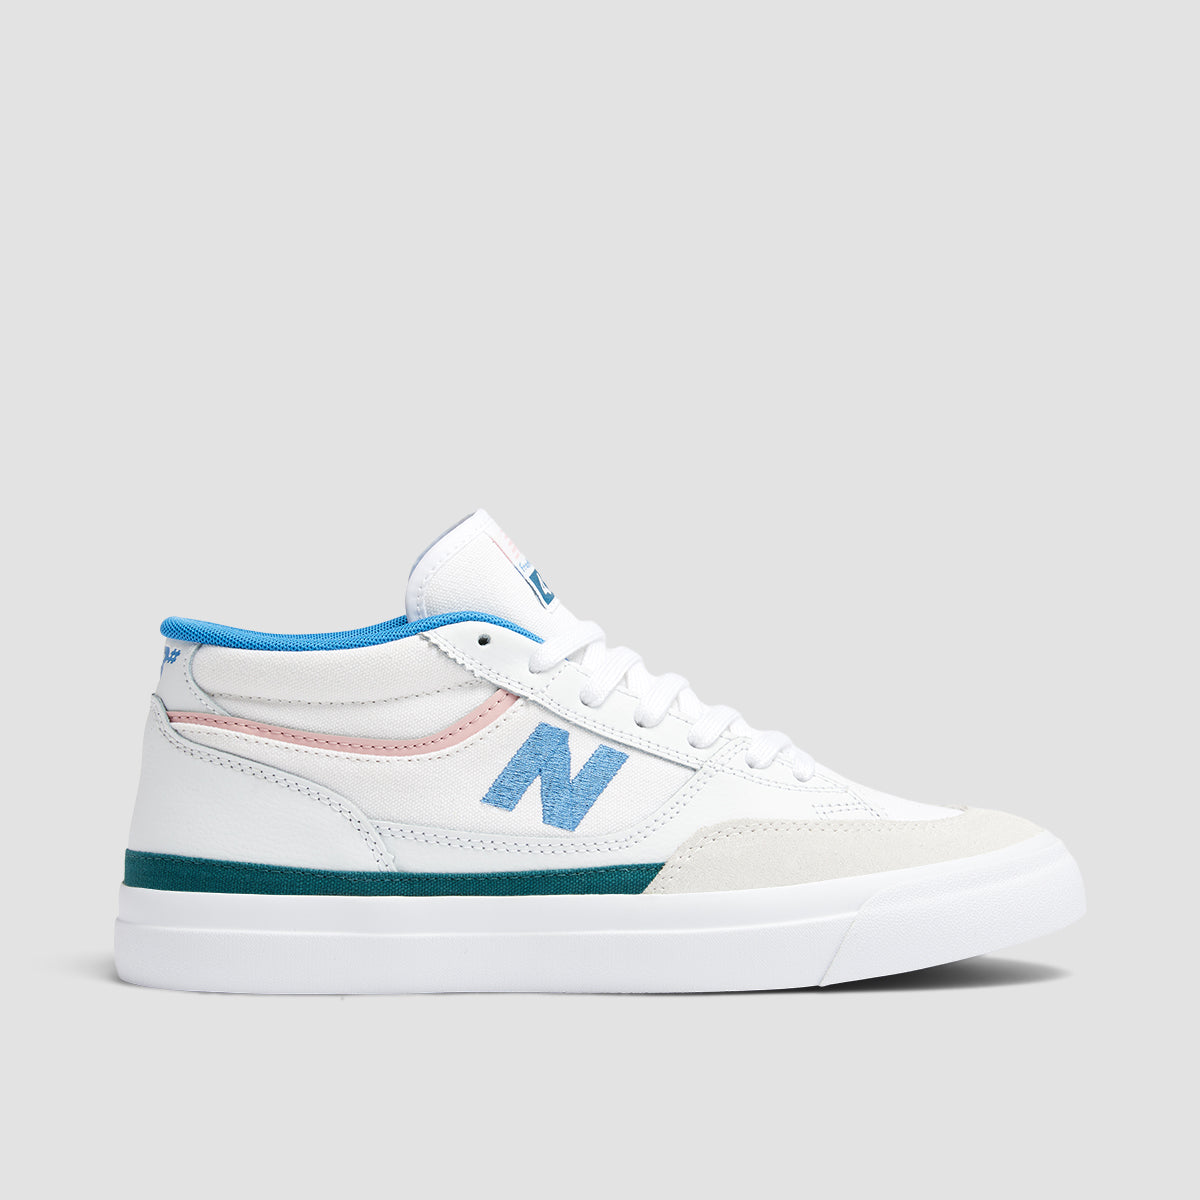 New Balance Numeric Franky Villani 417 Mid Top Shoes - White/Blue Laguna